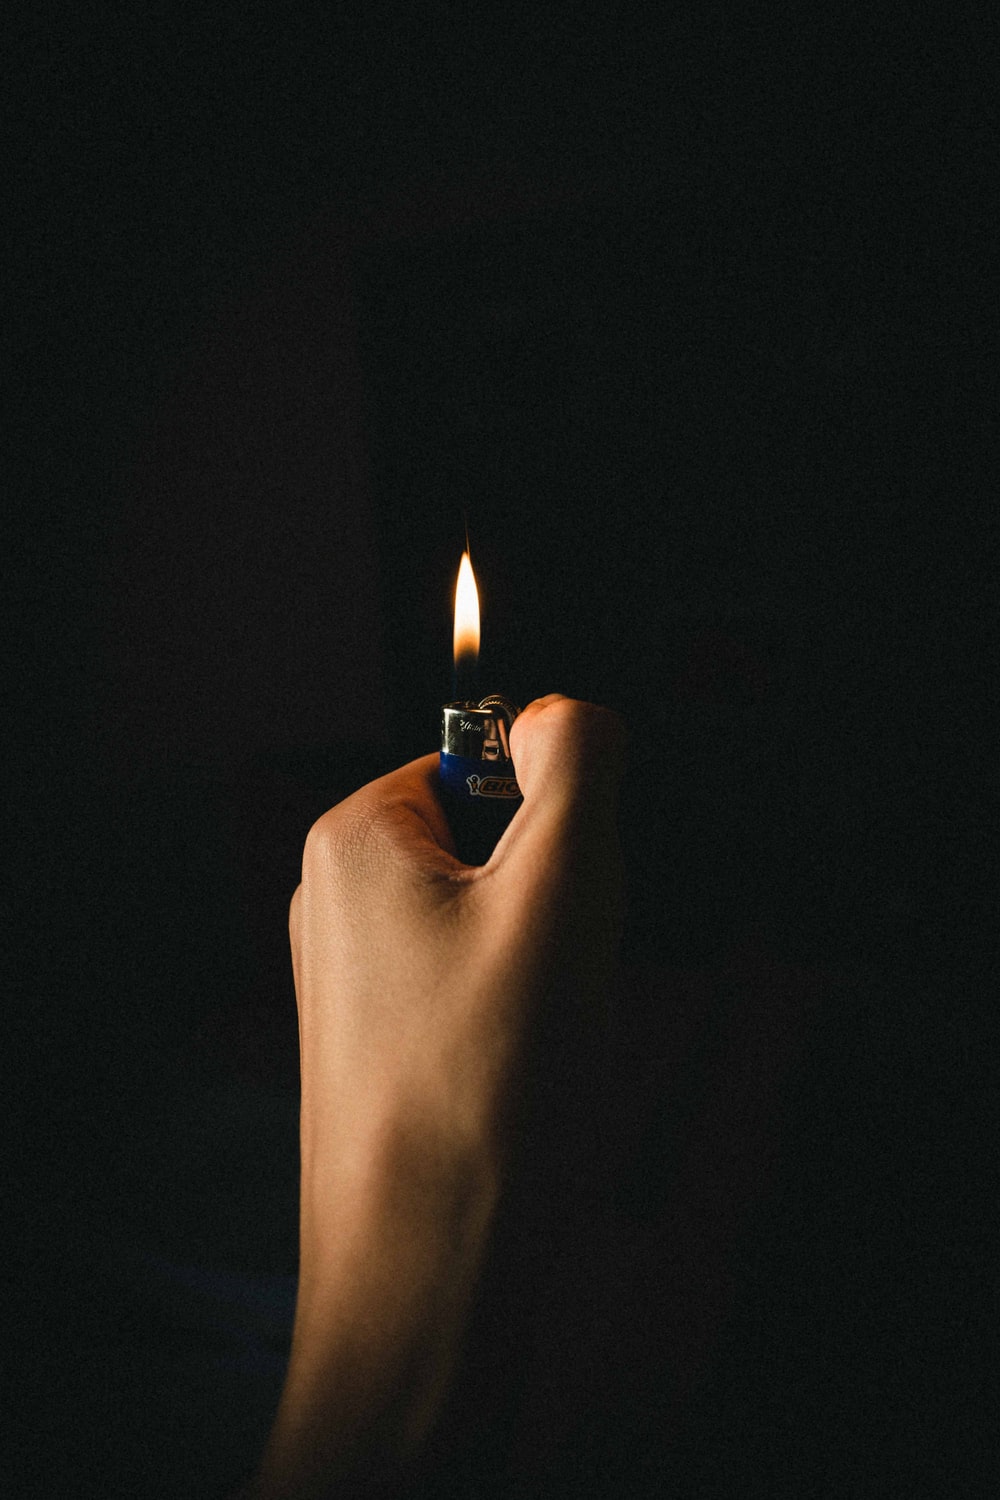 Person Lighting Lighter On Black Background Photo